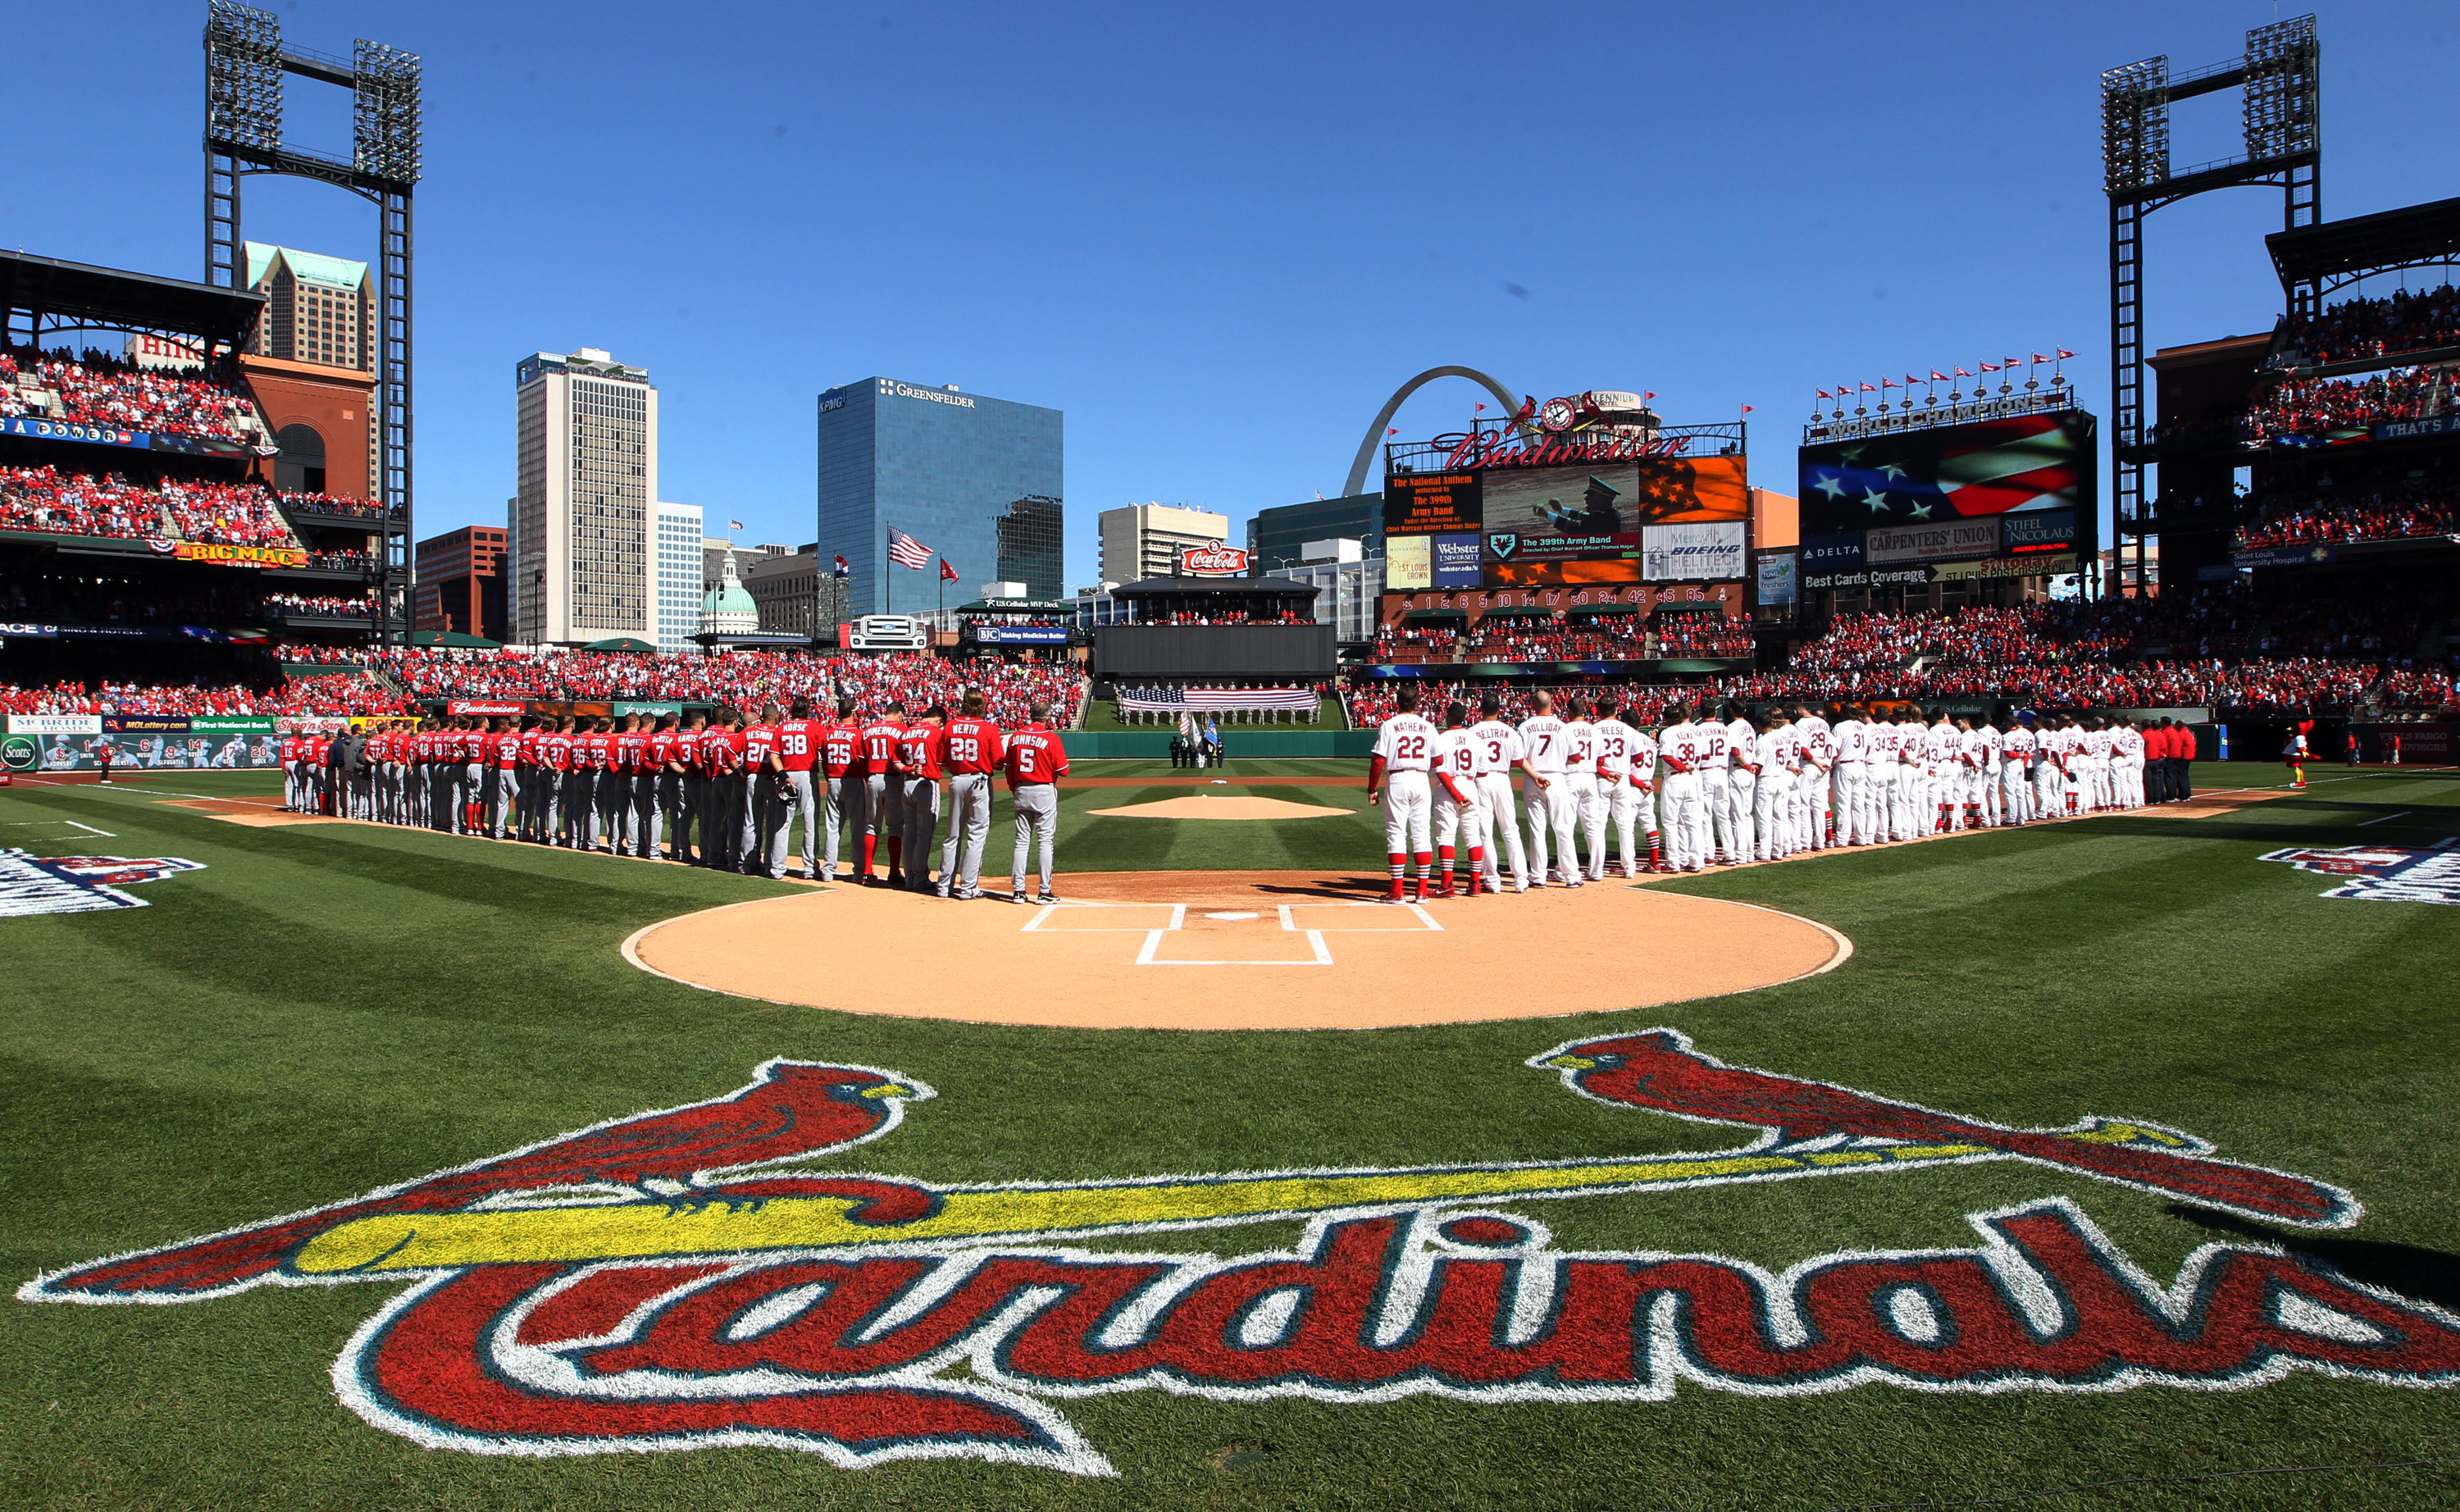 HD wallpaper: Baseball, St. Louis Cardinals, Logo, MLB